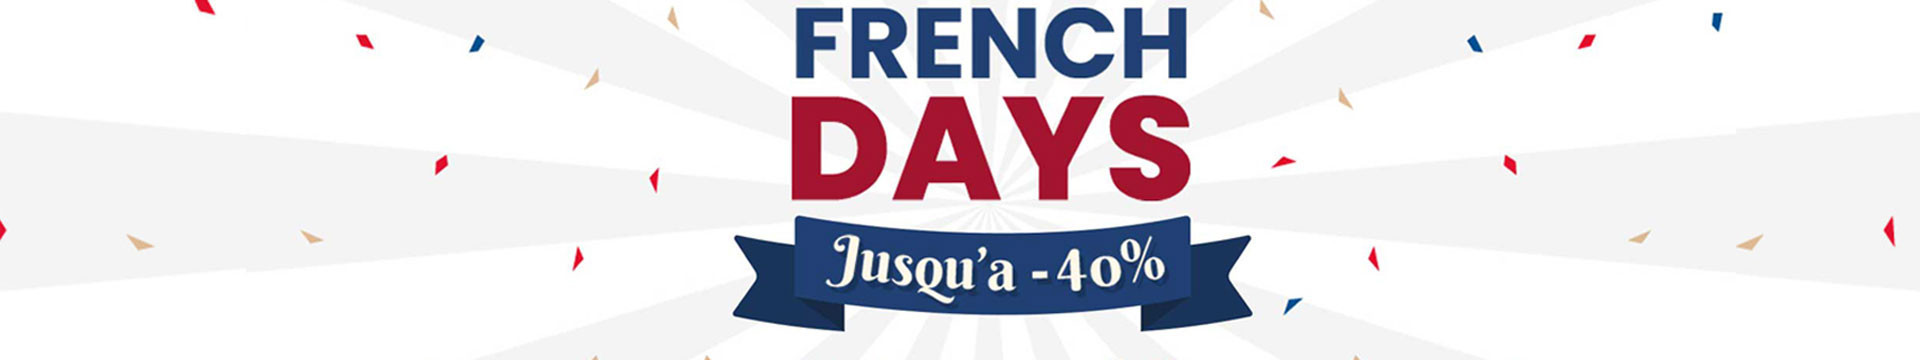 French Days -25%